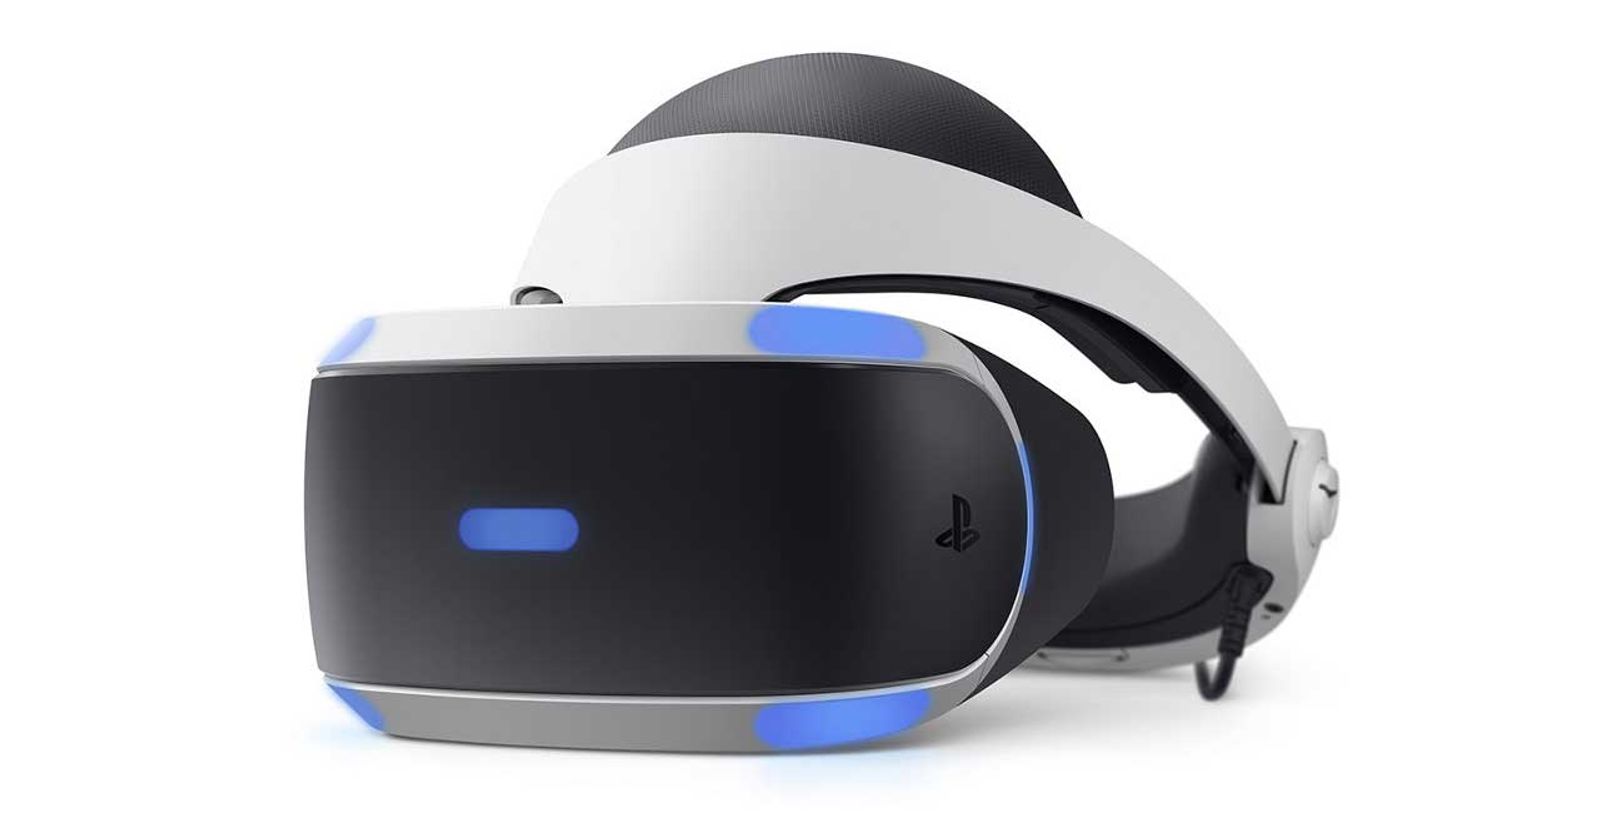 PlayStation VR - Doom Bundle [Discontinued]